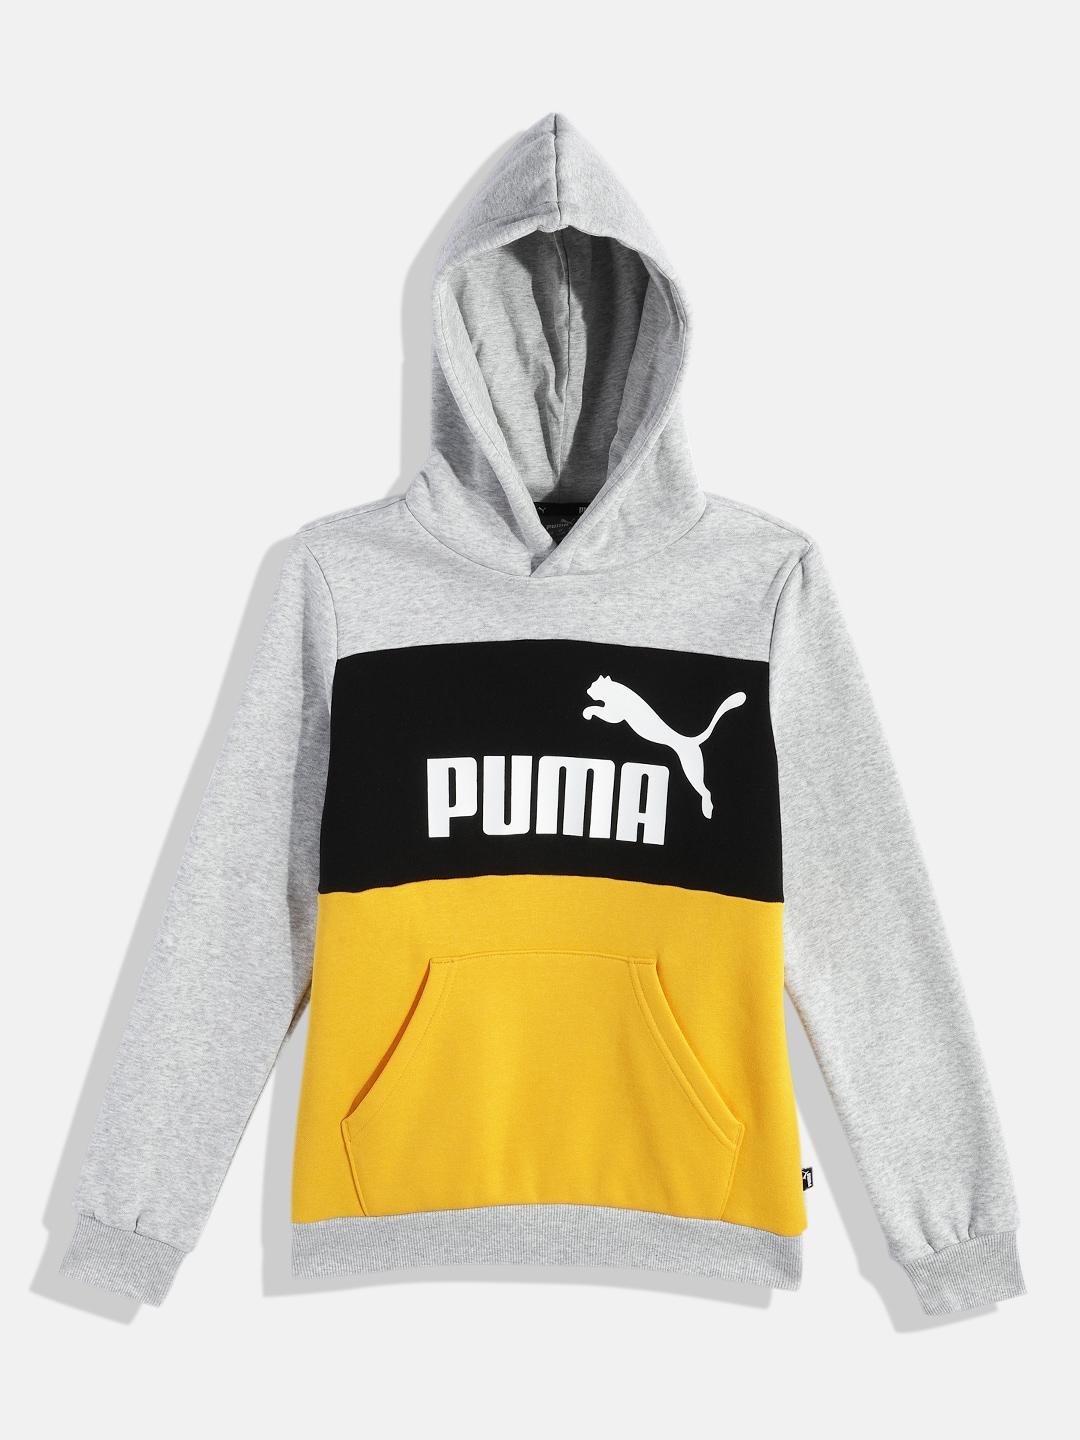 Puma Boys Grey Melange & Black Colourblocked Hooded Sweatshirt